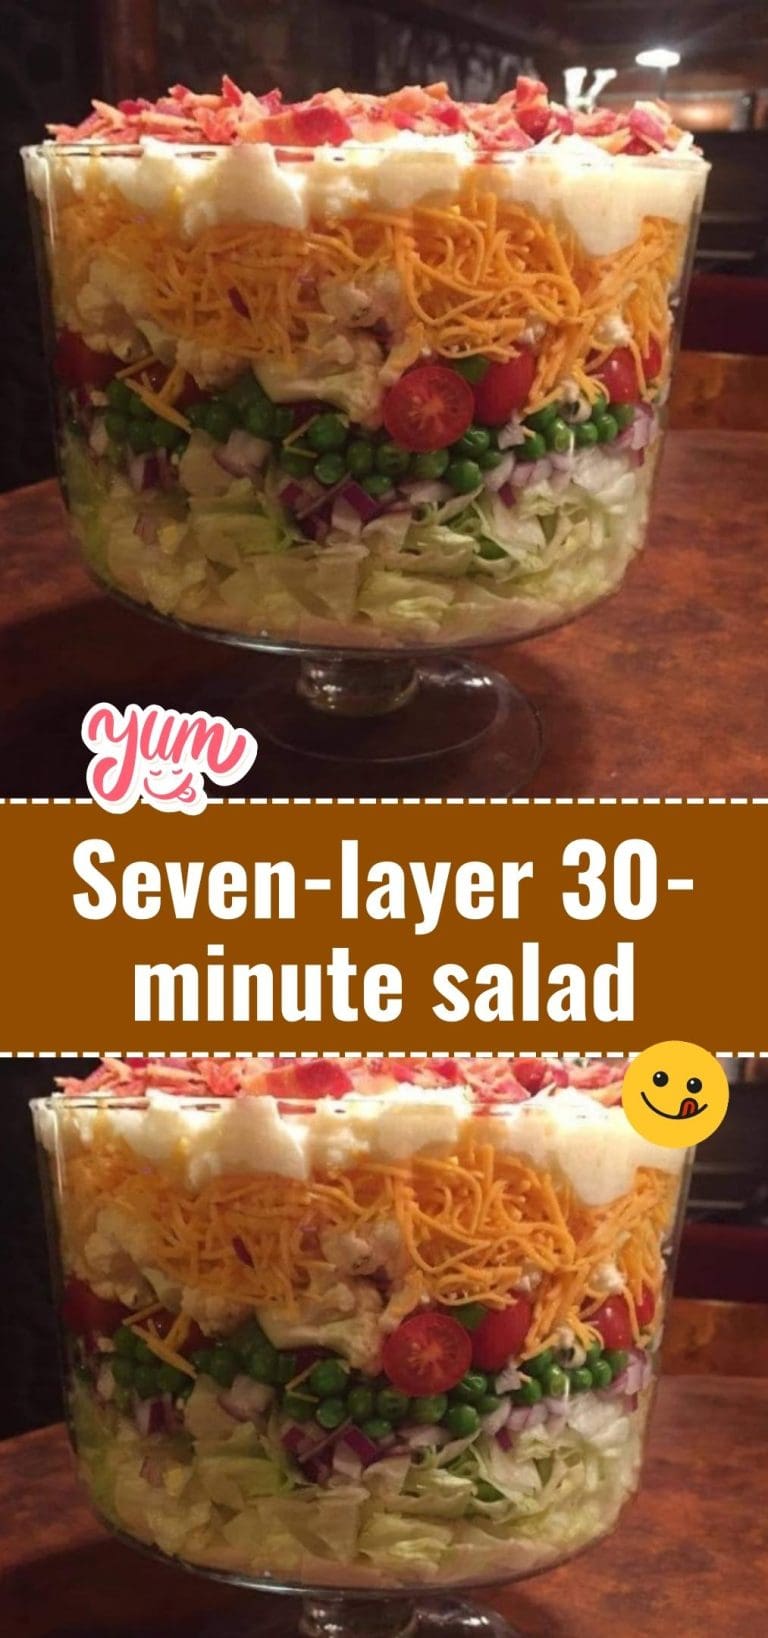 Seven-layer 30-minute salad